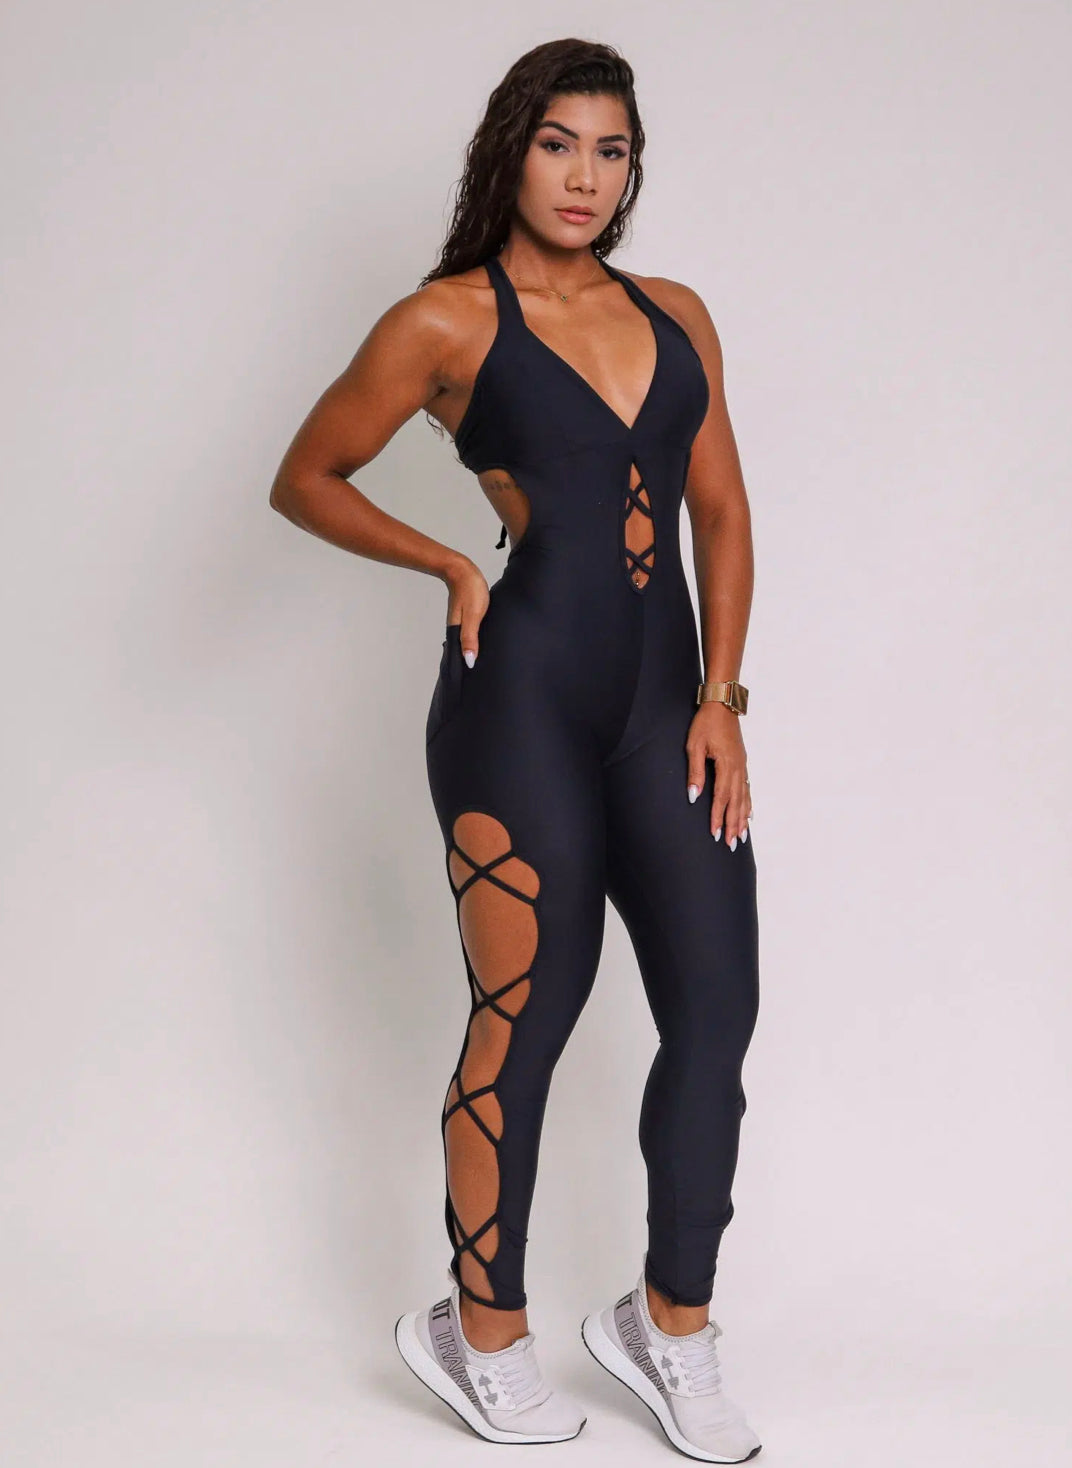 Juliana Black Bodysuit – Karoll Brazil